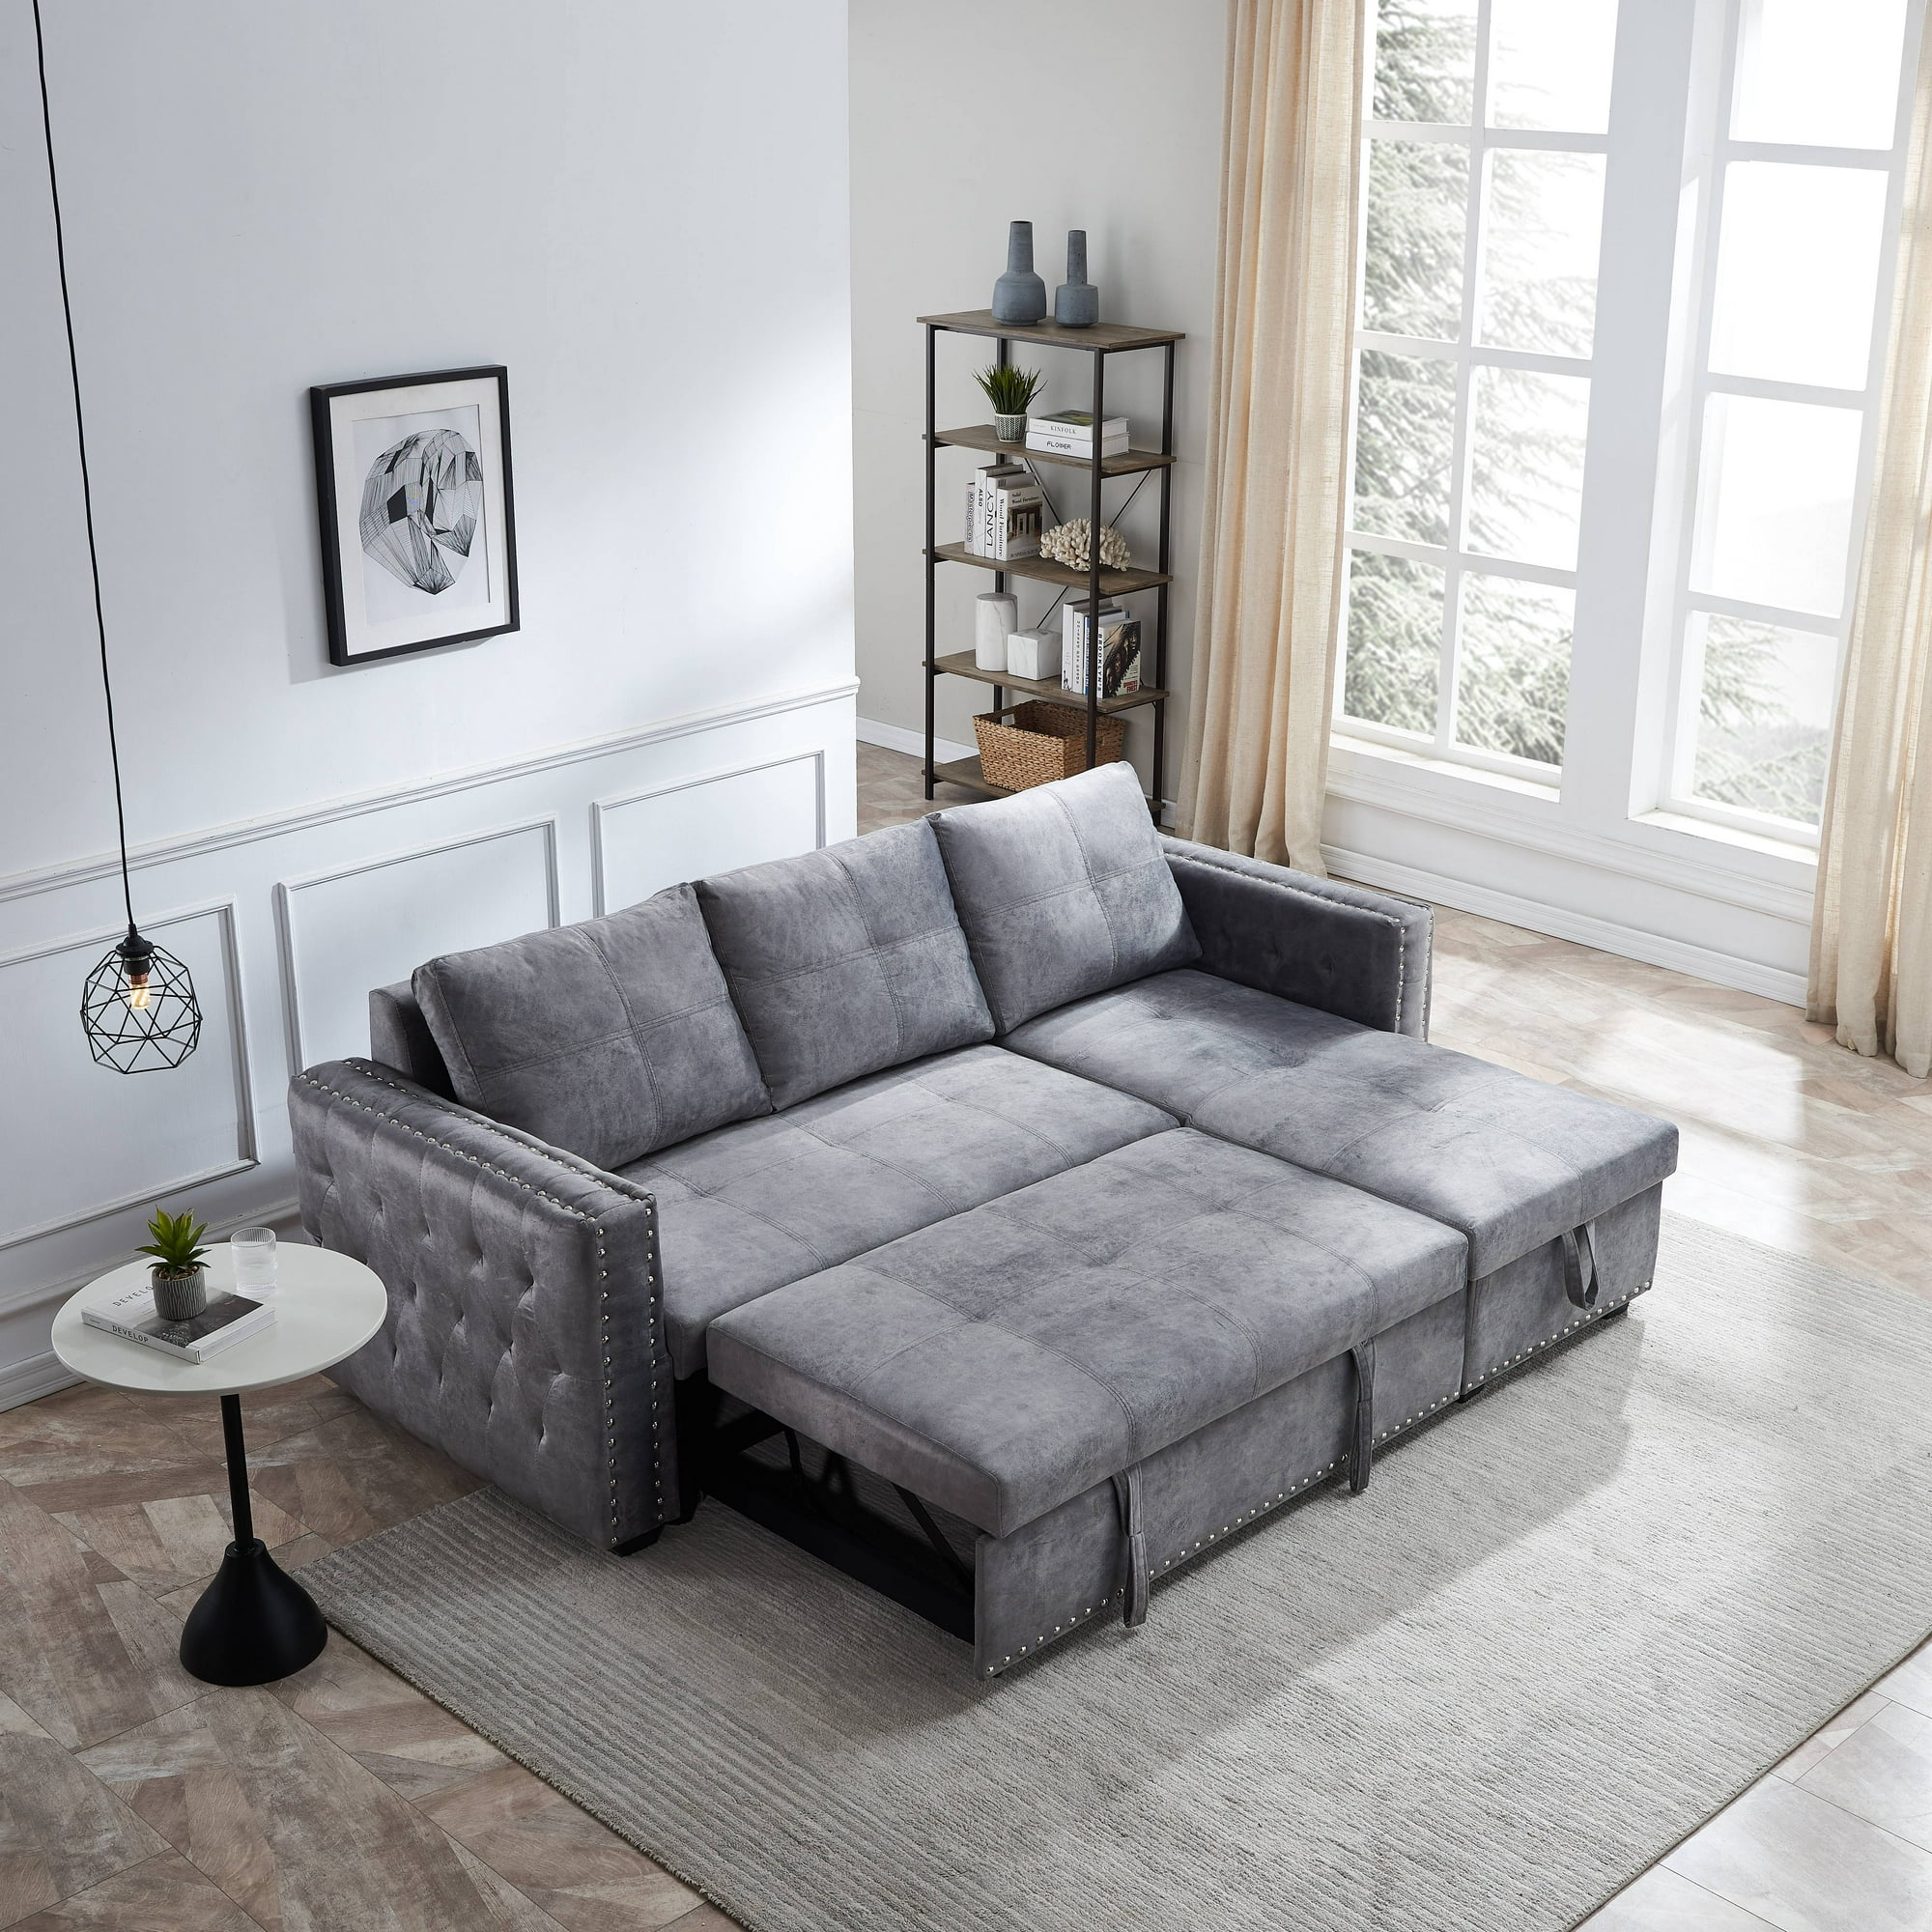 Irene Inevent 91″ Reversible Sleeper Sectional Sofa Corner Sofa Bed with storage